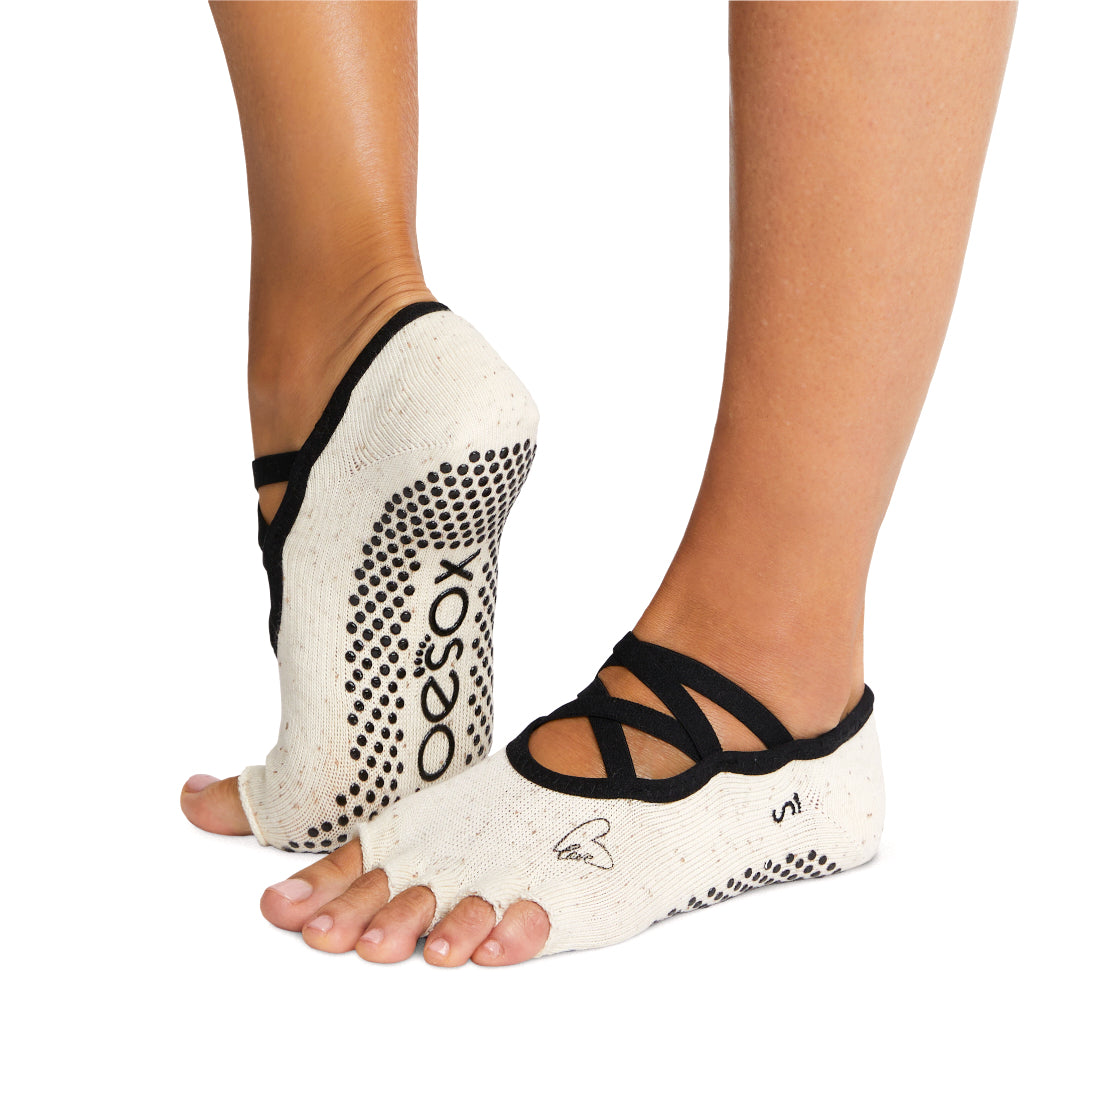 Elle Half Toe - Vacay Mode Grip Socks (Barre / Pilates / Yoga)